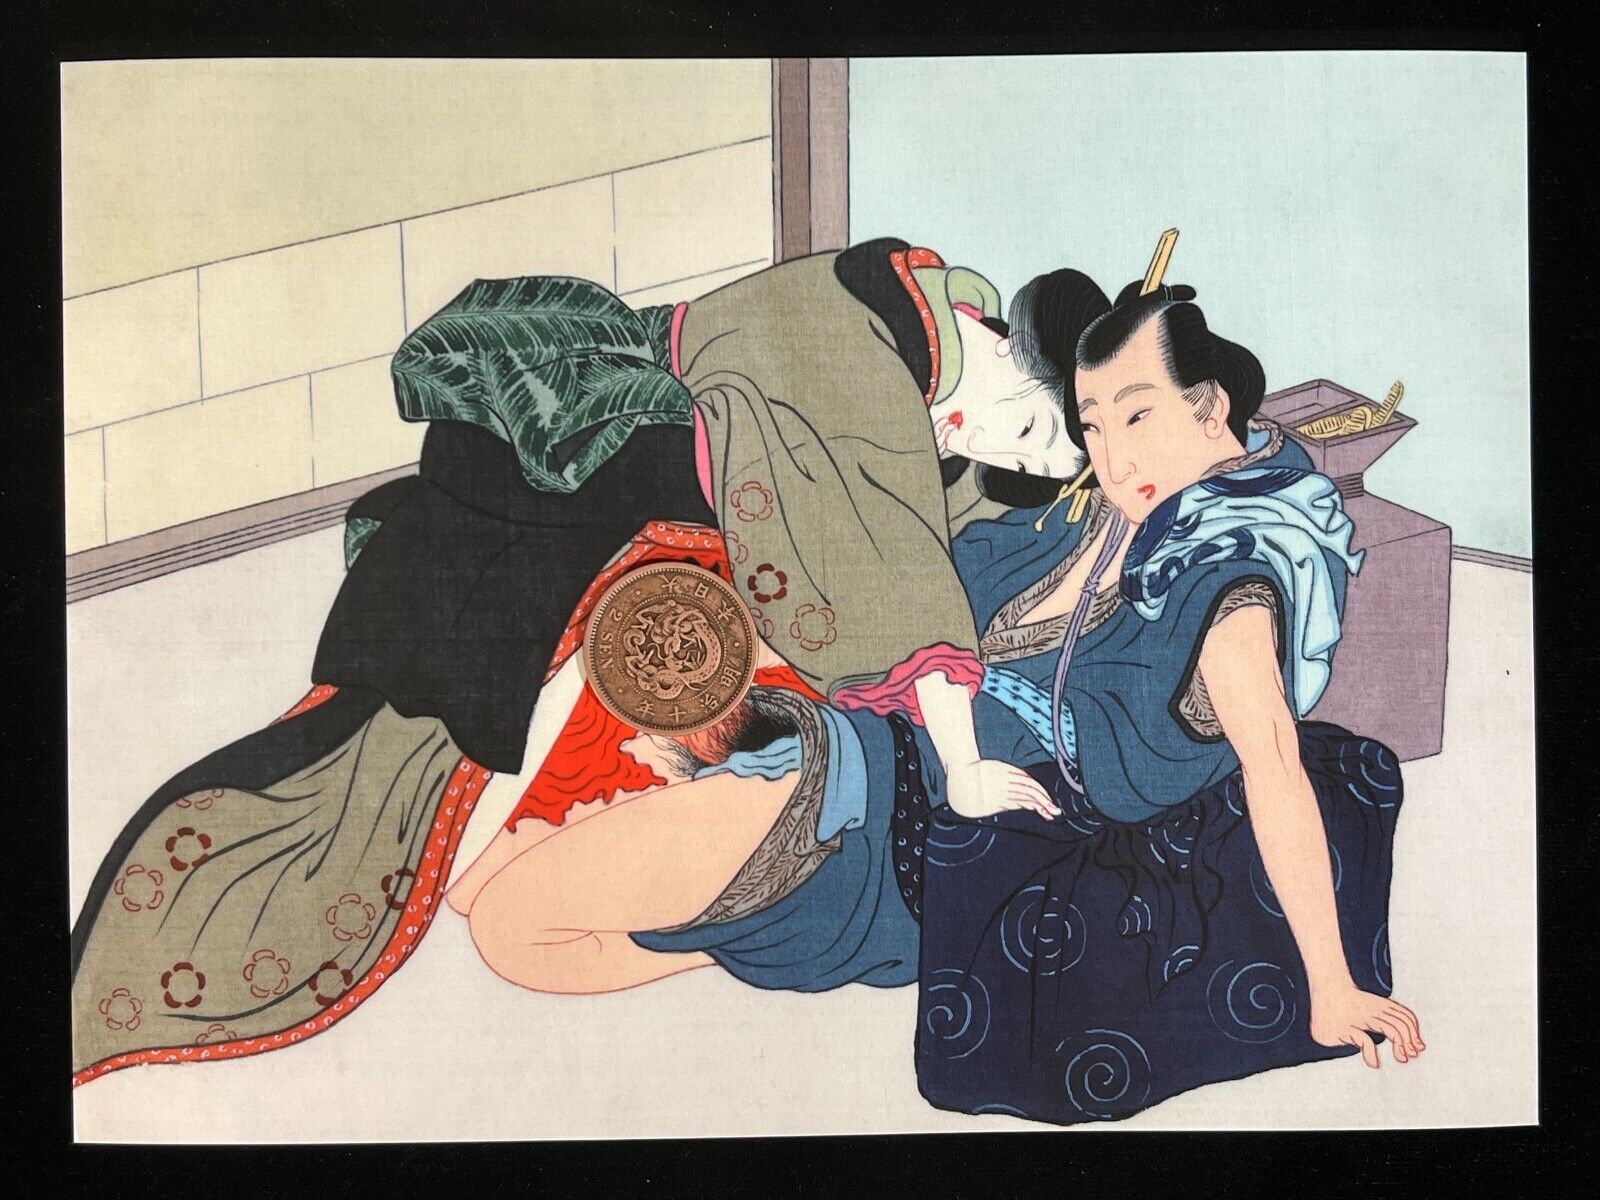 Shunga Japanese Erotic Art Giclee Print Painting On Silk 10.5" X Shogun's Gallery